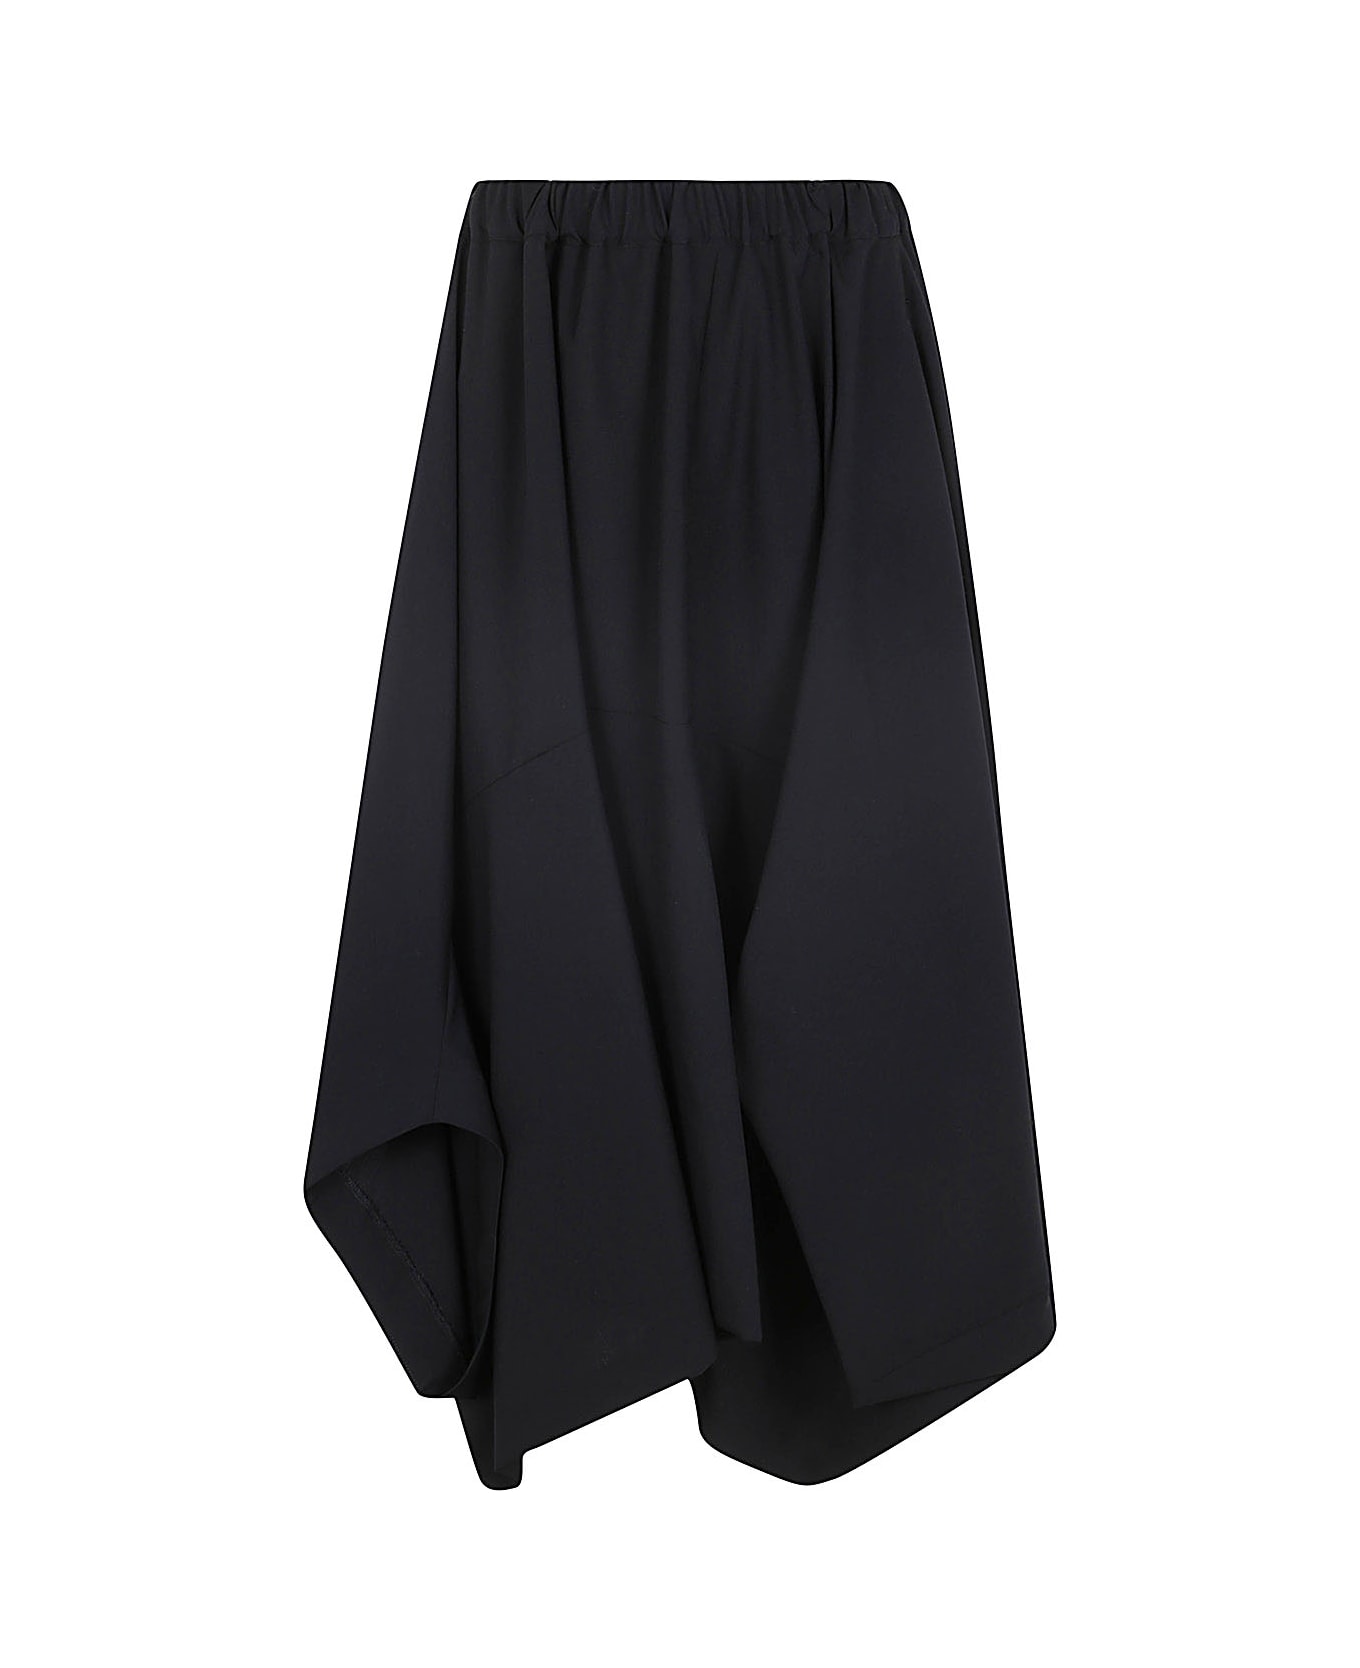 Comme des Garçons Comme des Garçons Skirt - Black スカート